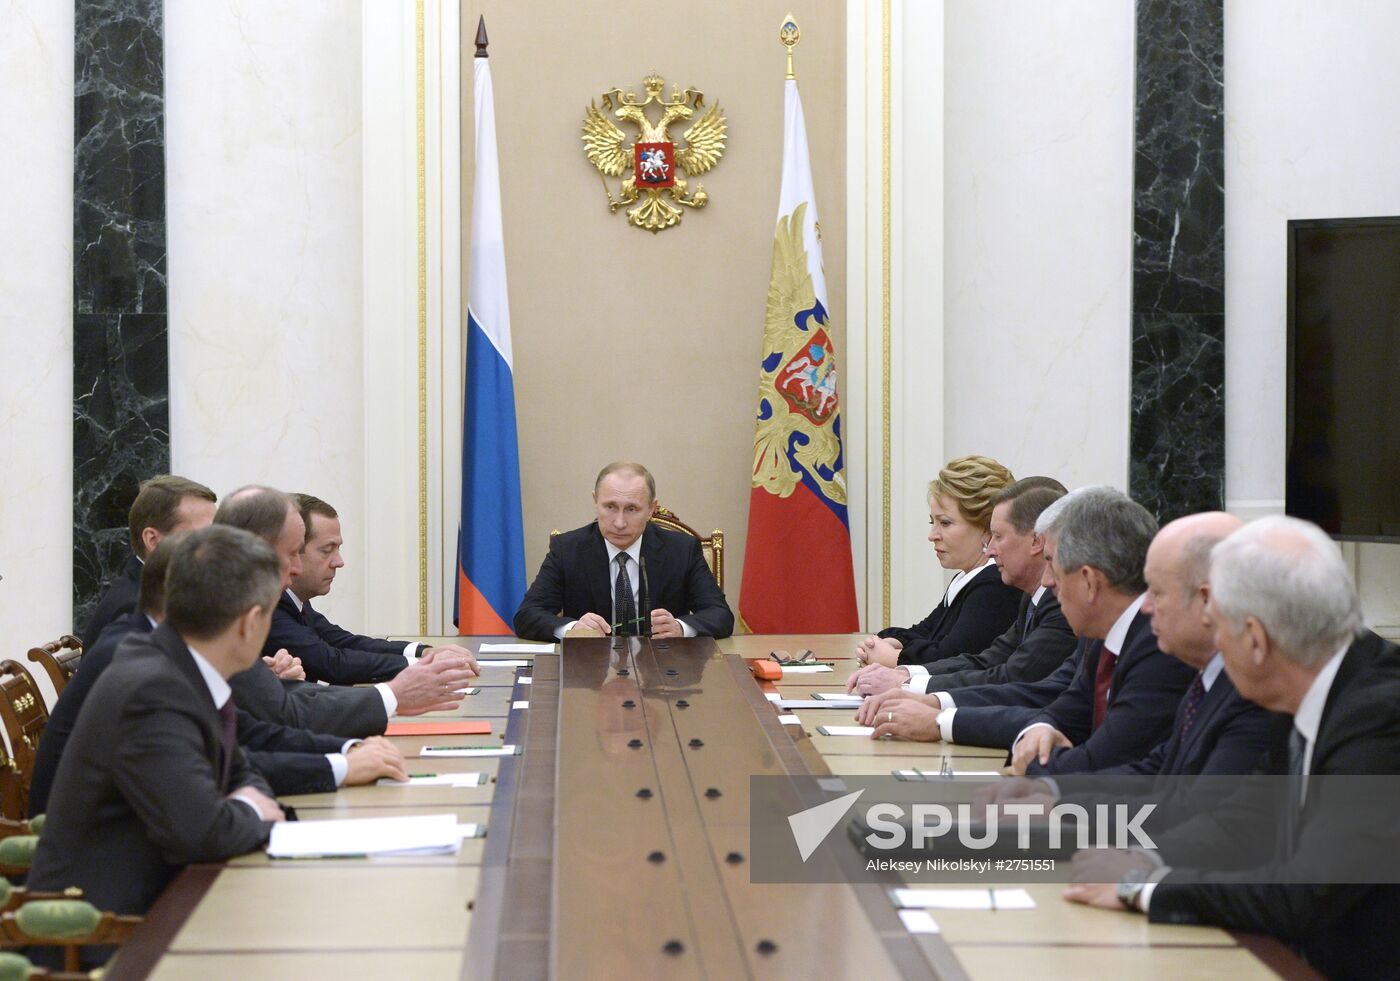 President Vladimir Putin chairs Secutiry Council meeting